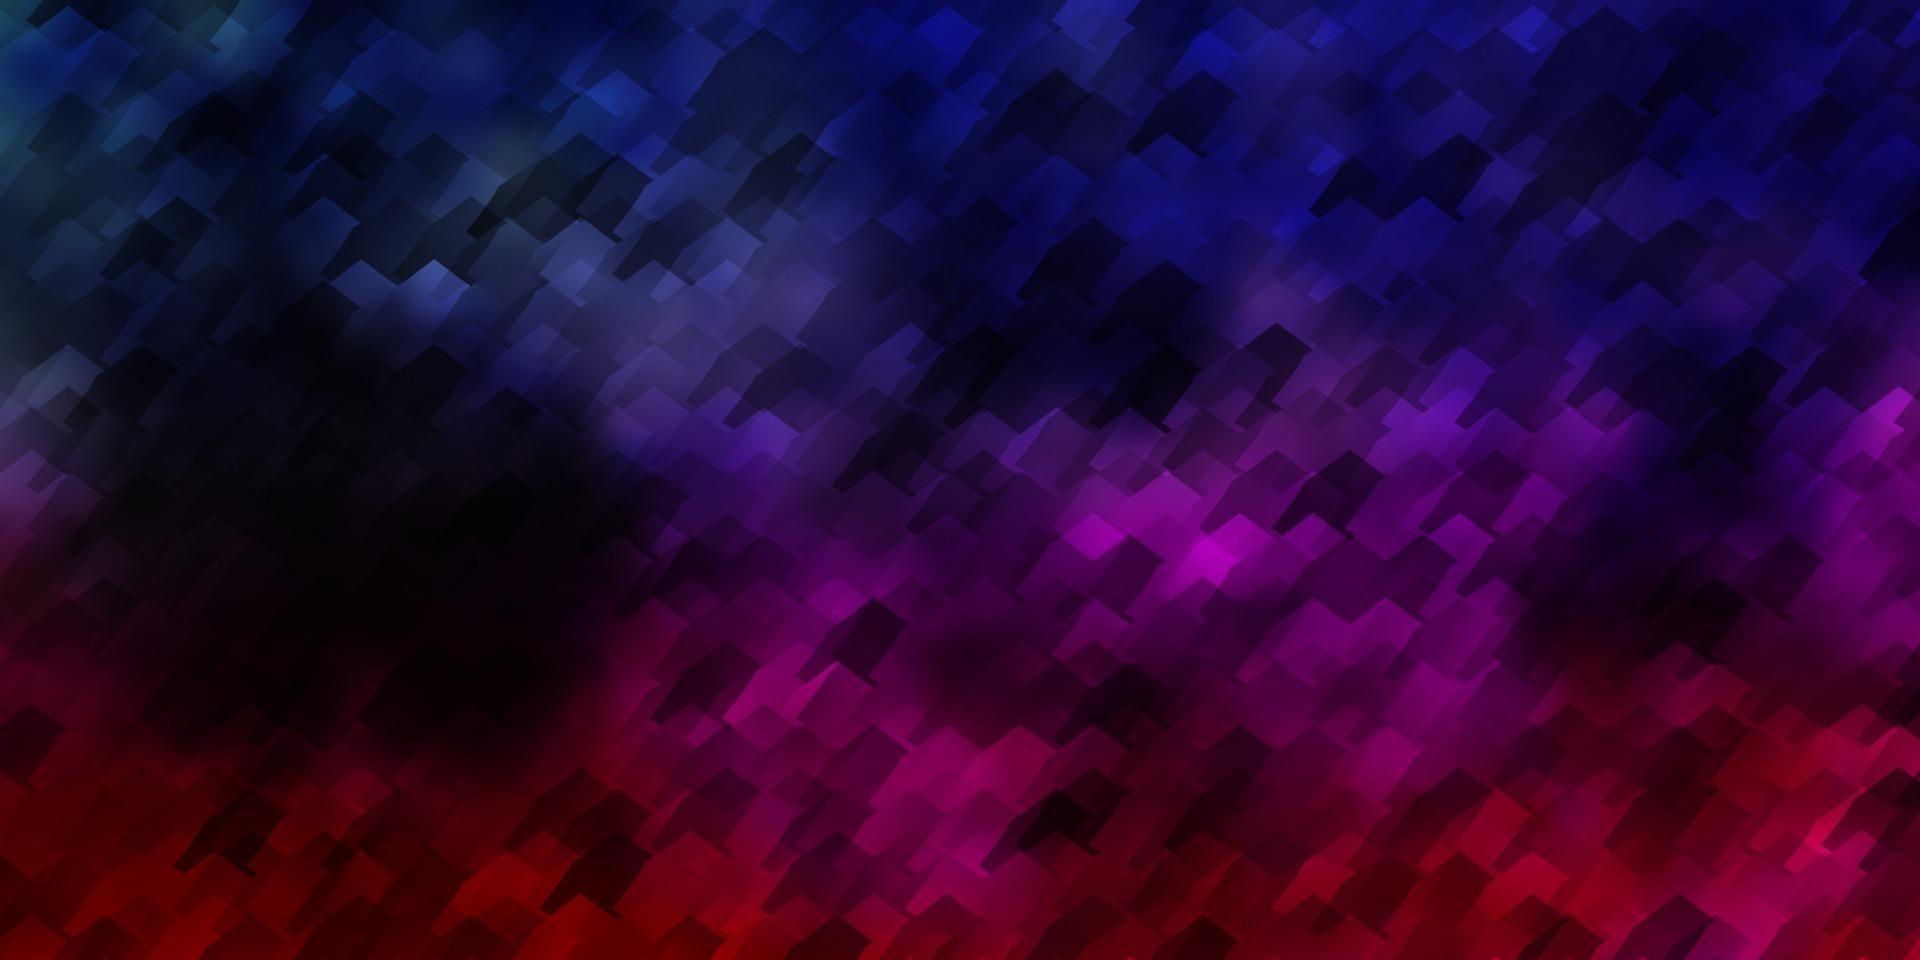 Fondo de vector púrpura oscuro con conjunto de hexágonos.